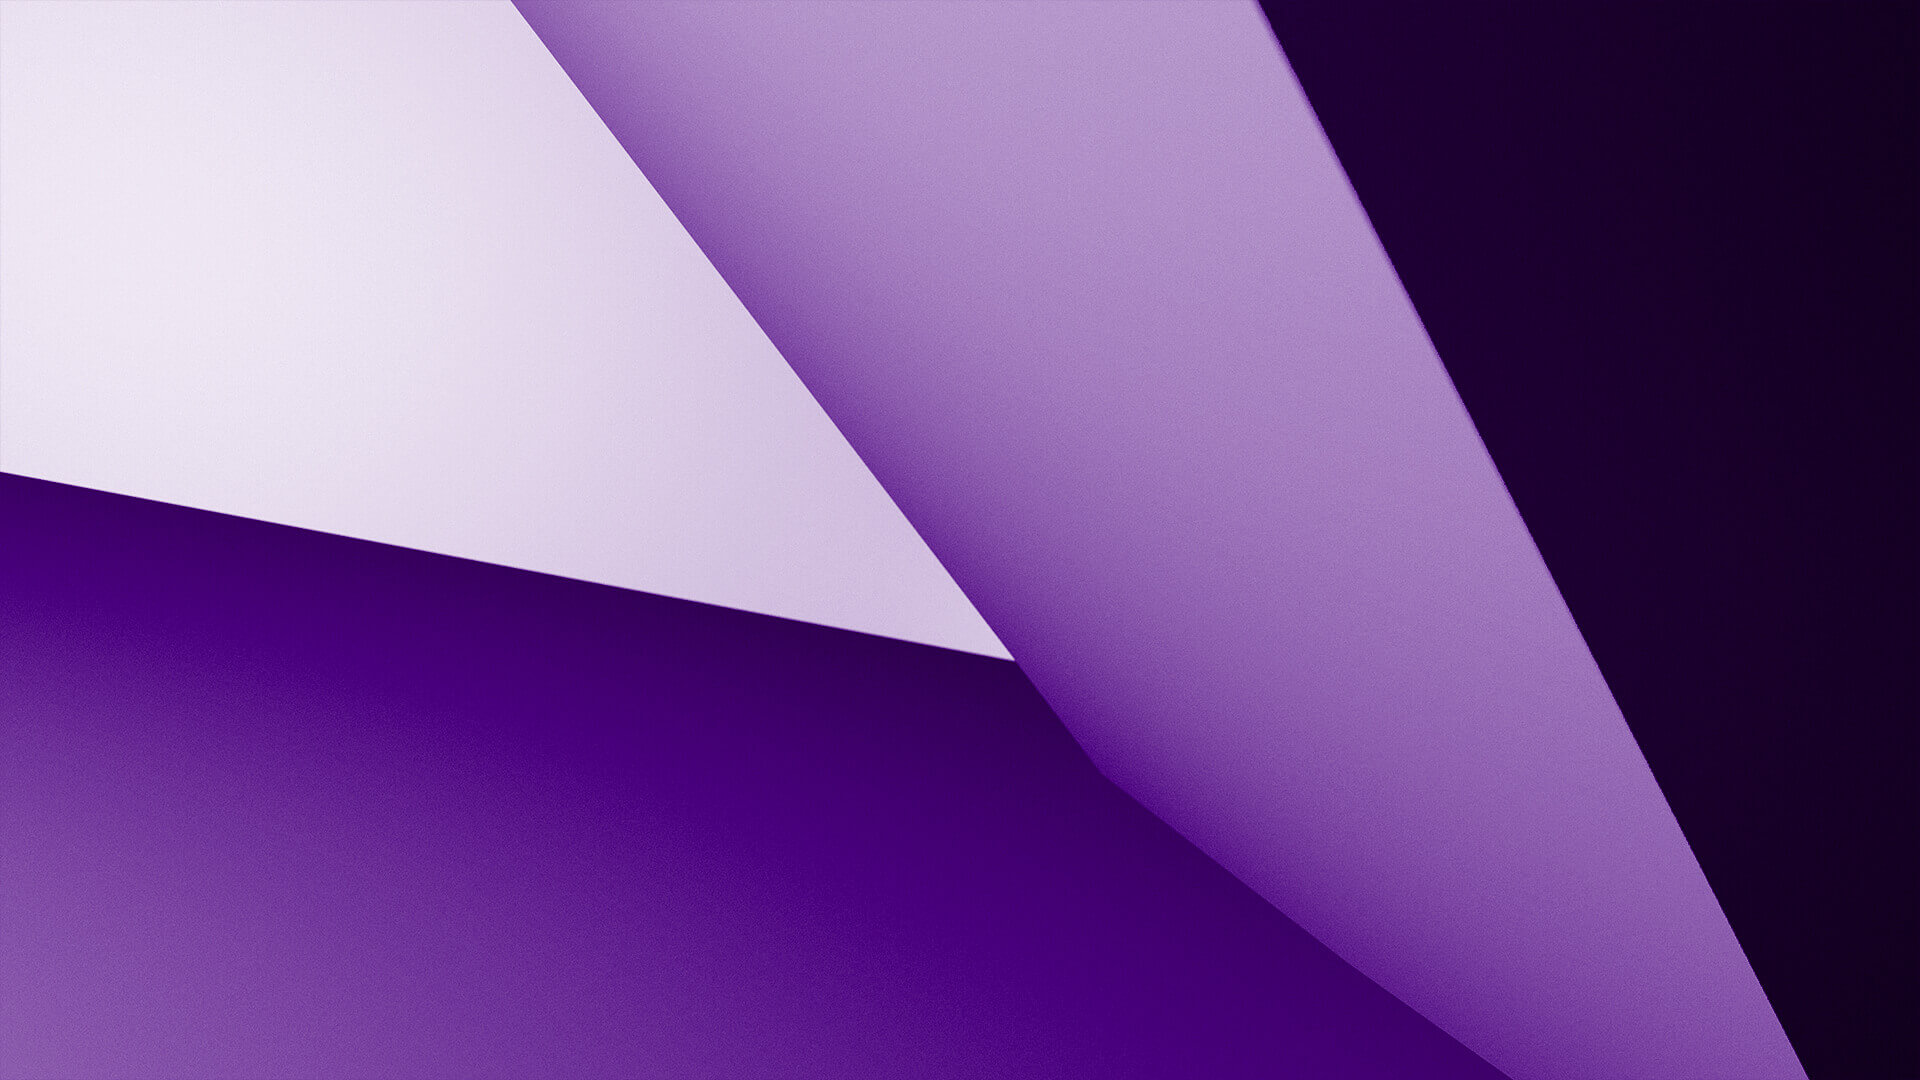 rra-background-purple-2-2018.jpg